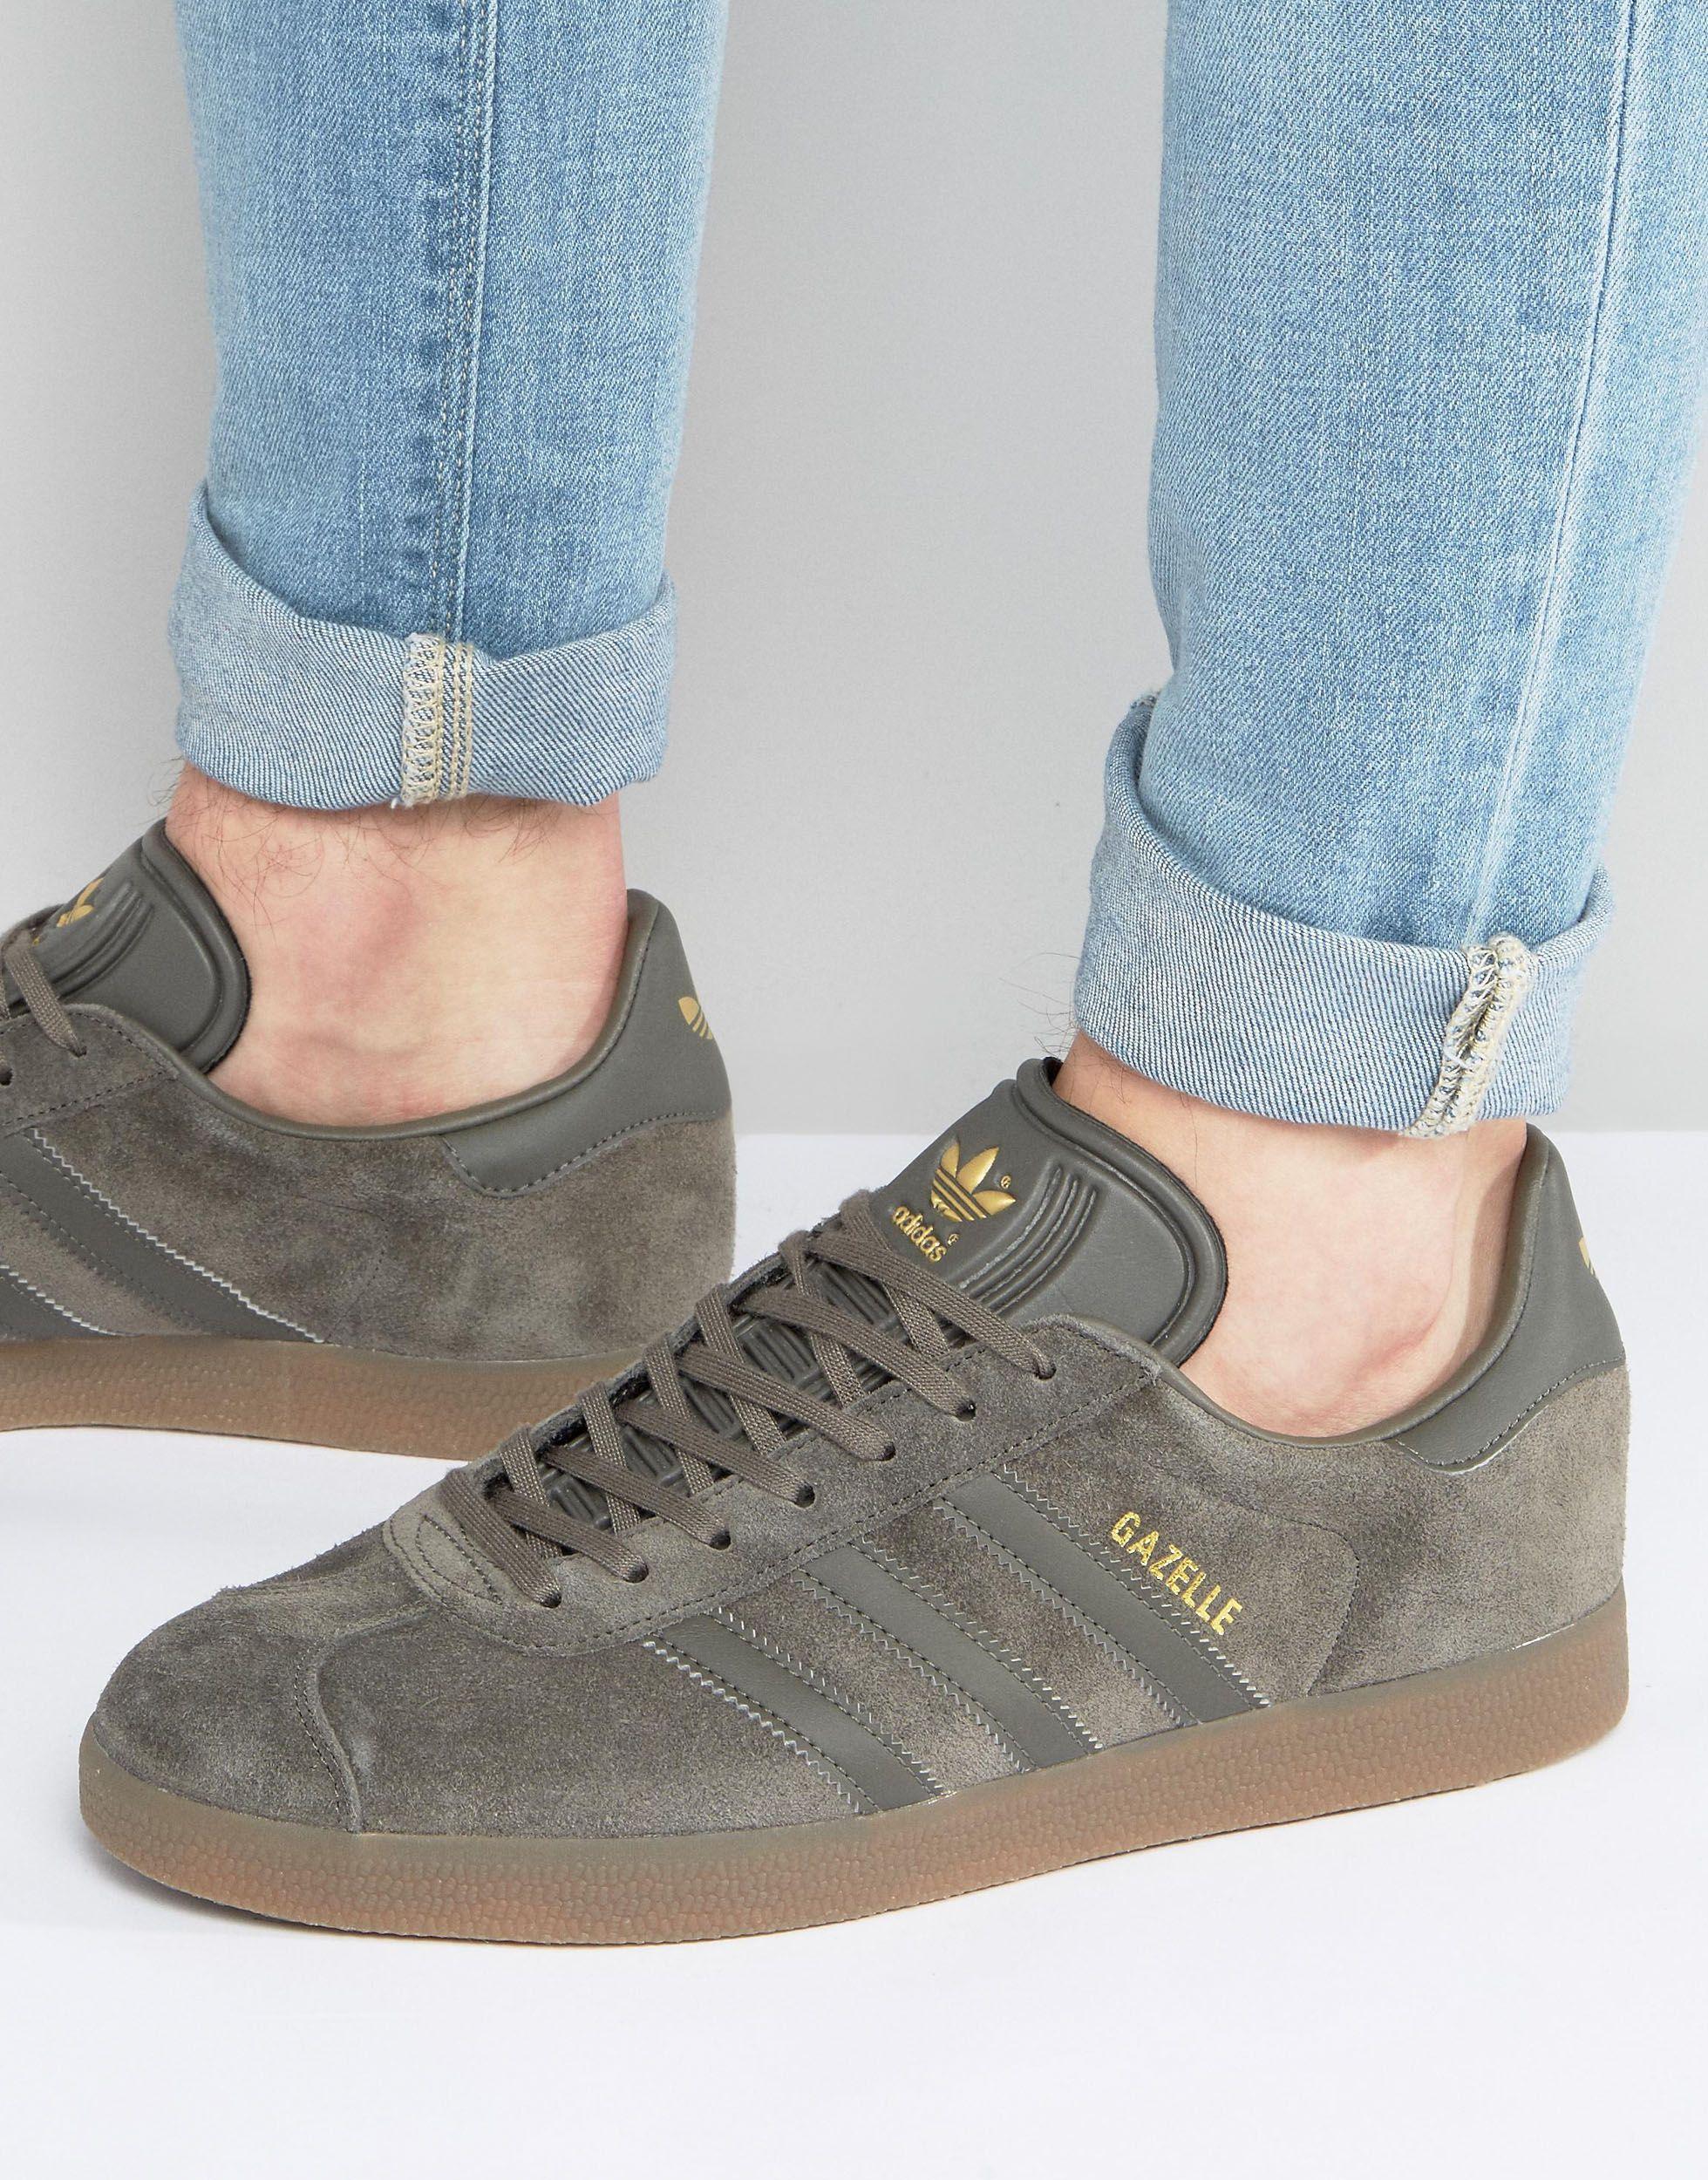 Originals Suede Gazelle Sneakers In Gray Bb2754 for -